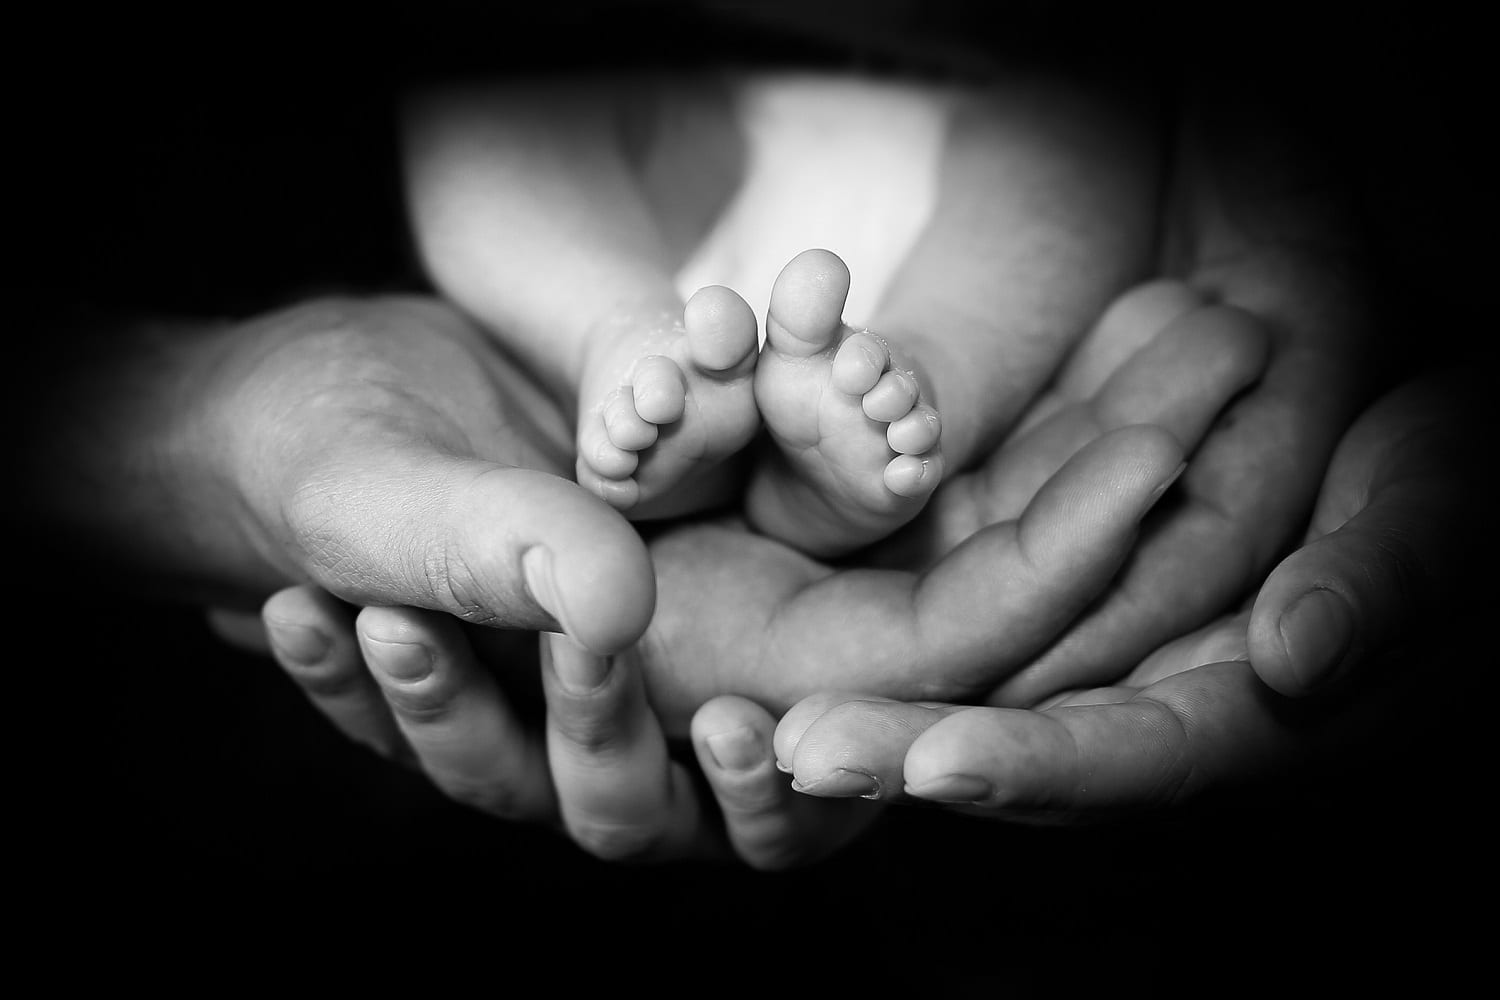 Baby feet cradled in parents' hands: ID 41326530 © Coreen Bester | Dreamstime.com